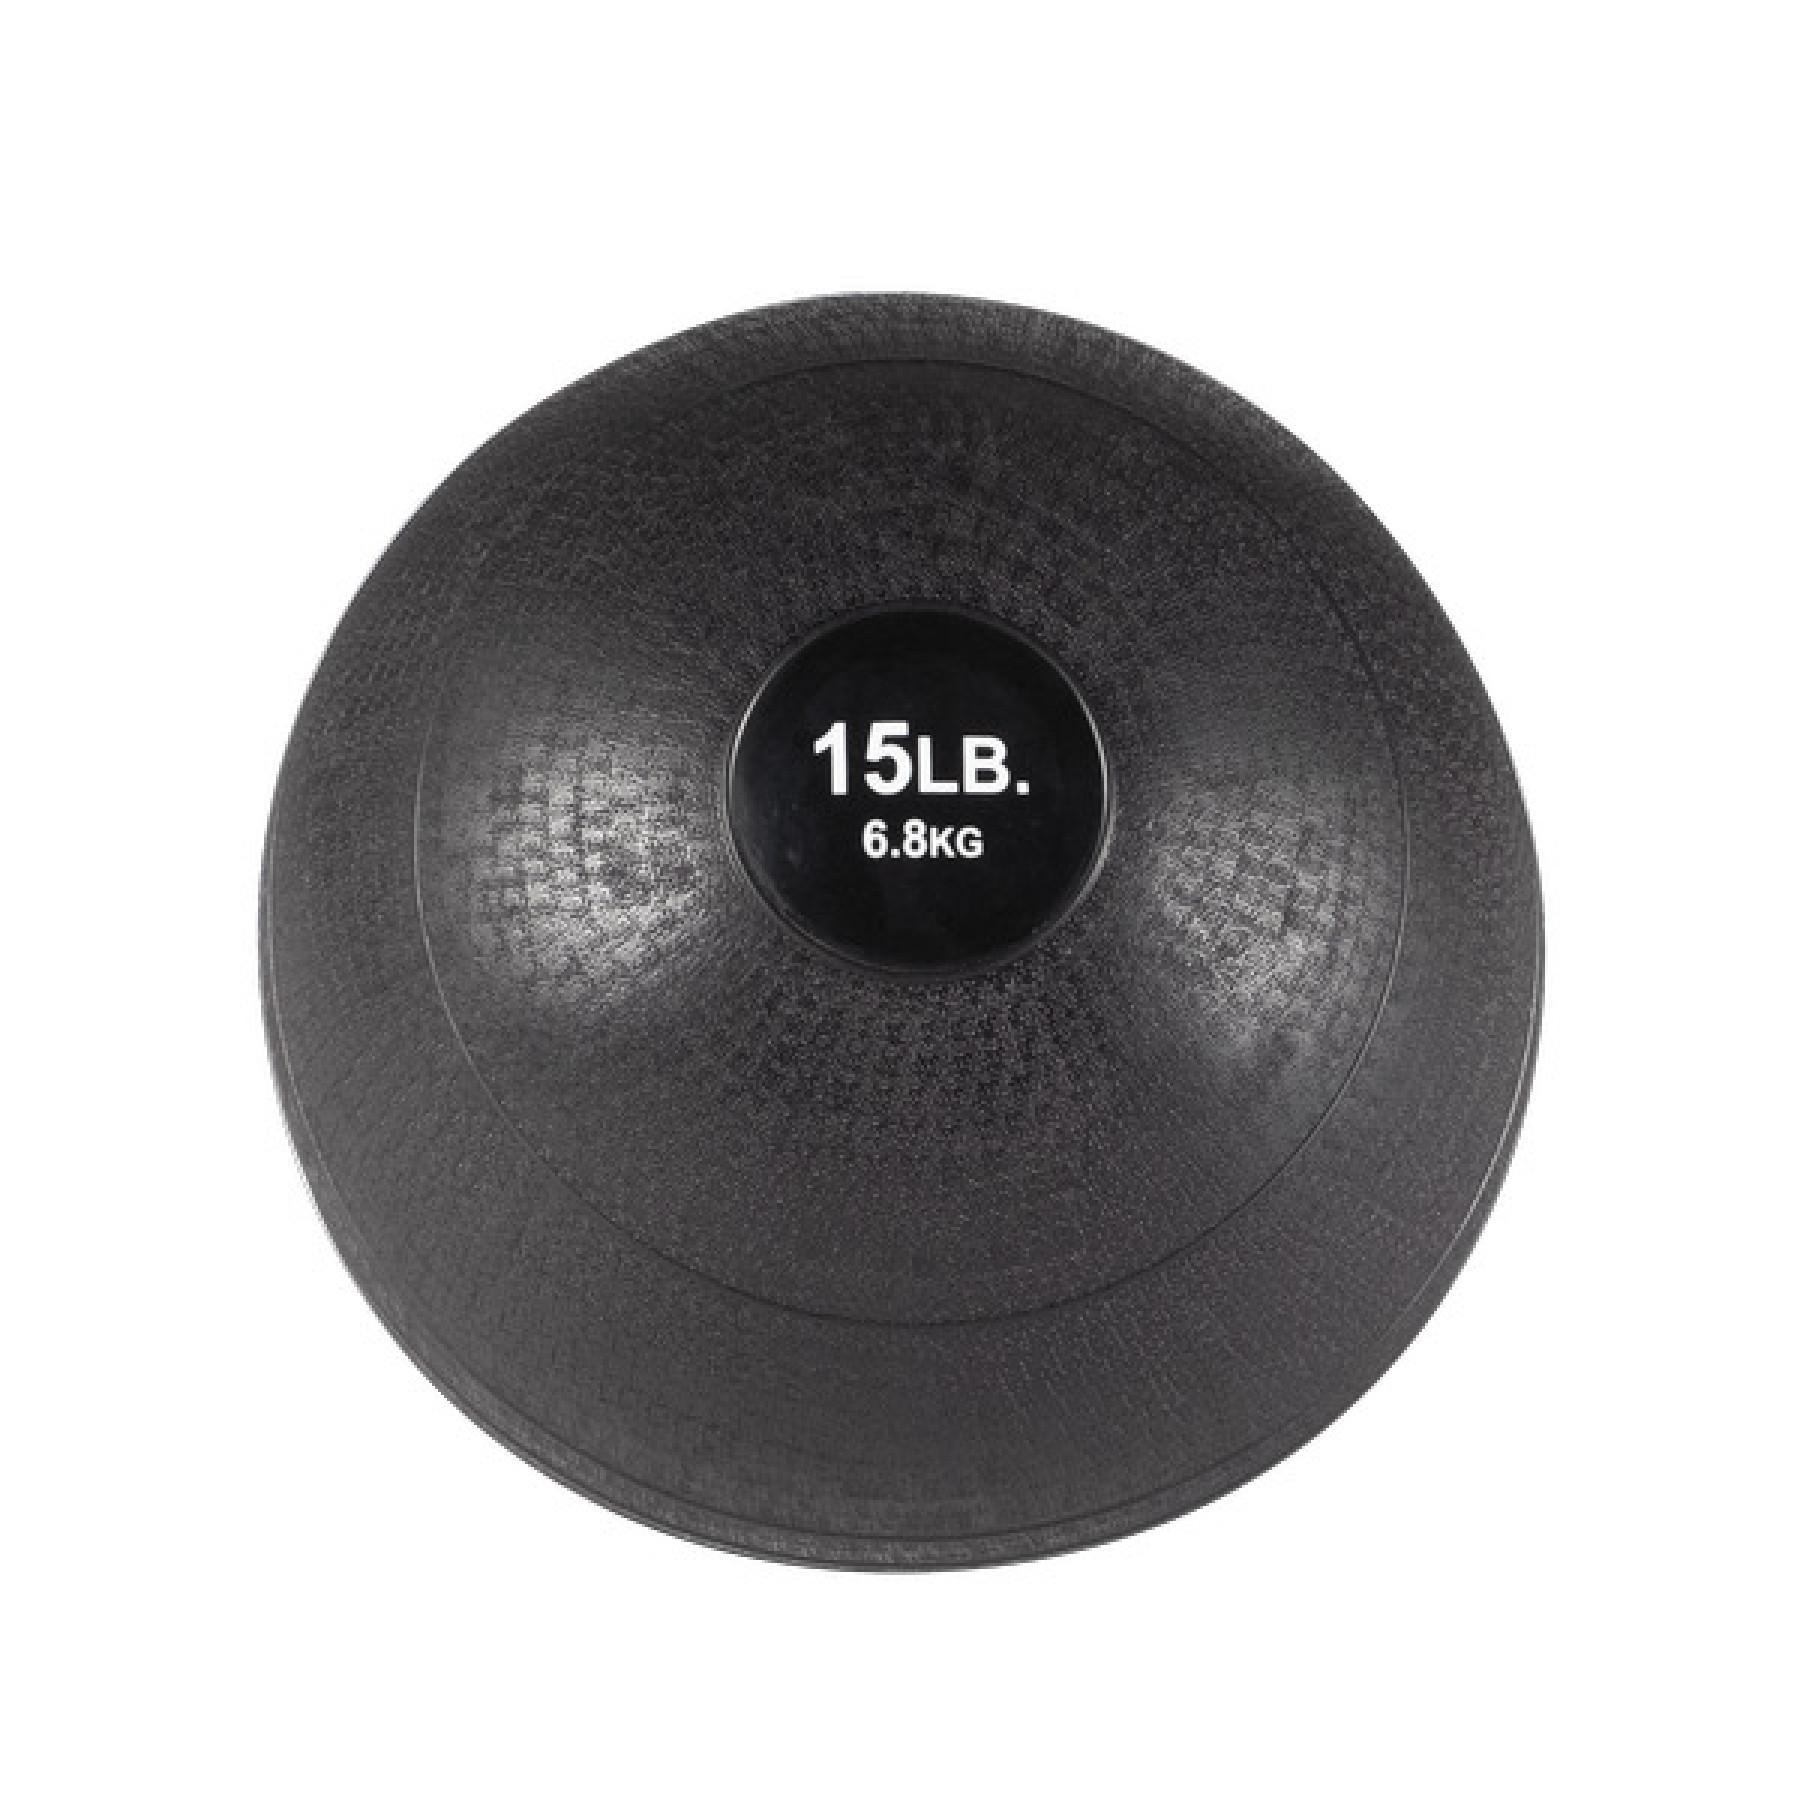 Slam ball 10 lb - 4,6 kg Body Solid